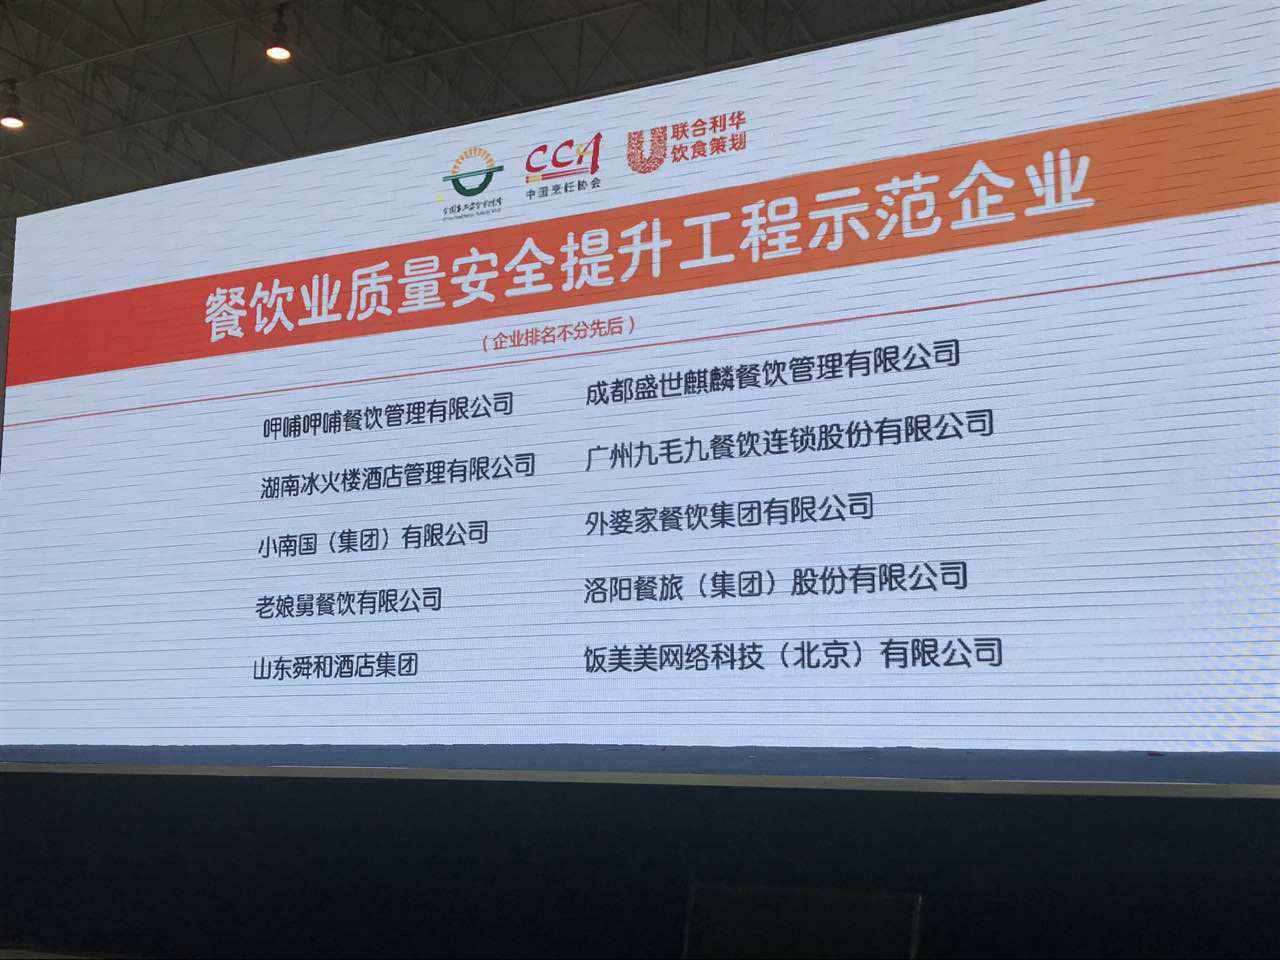 HG皇冠手机官网|中国有限公司官网入选全国首批“餐饮业质量安全提升工程示范企业”